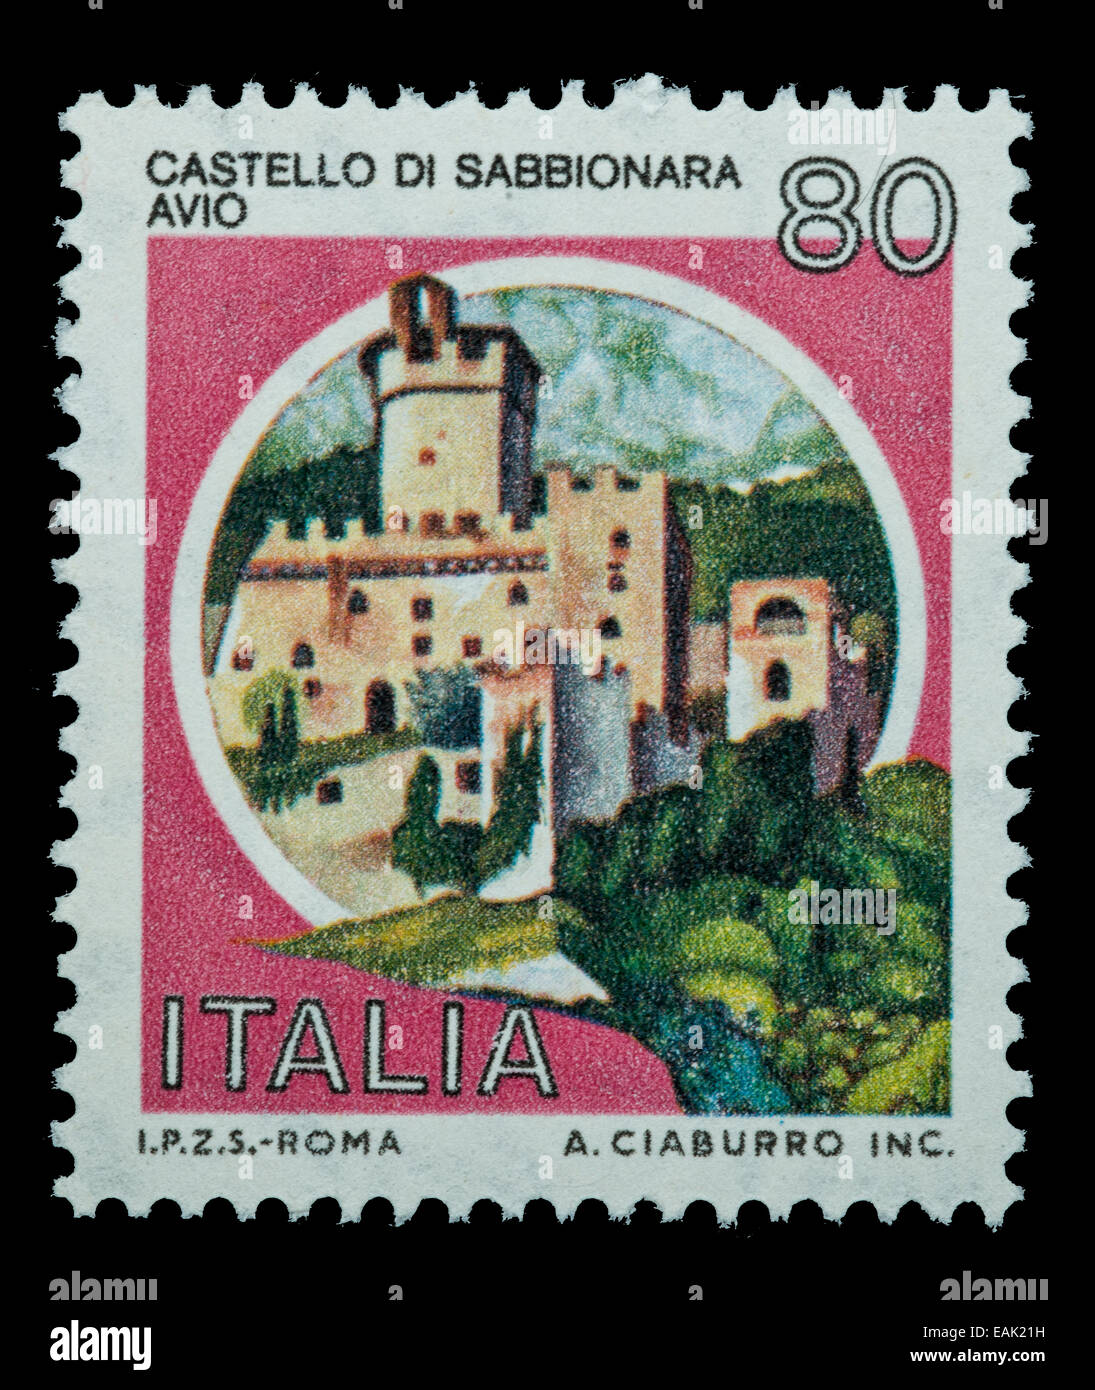 the castle of Sabbionara Avio in an italian stamp Stock Photo